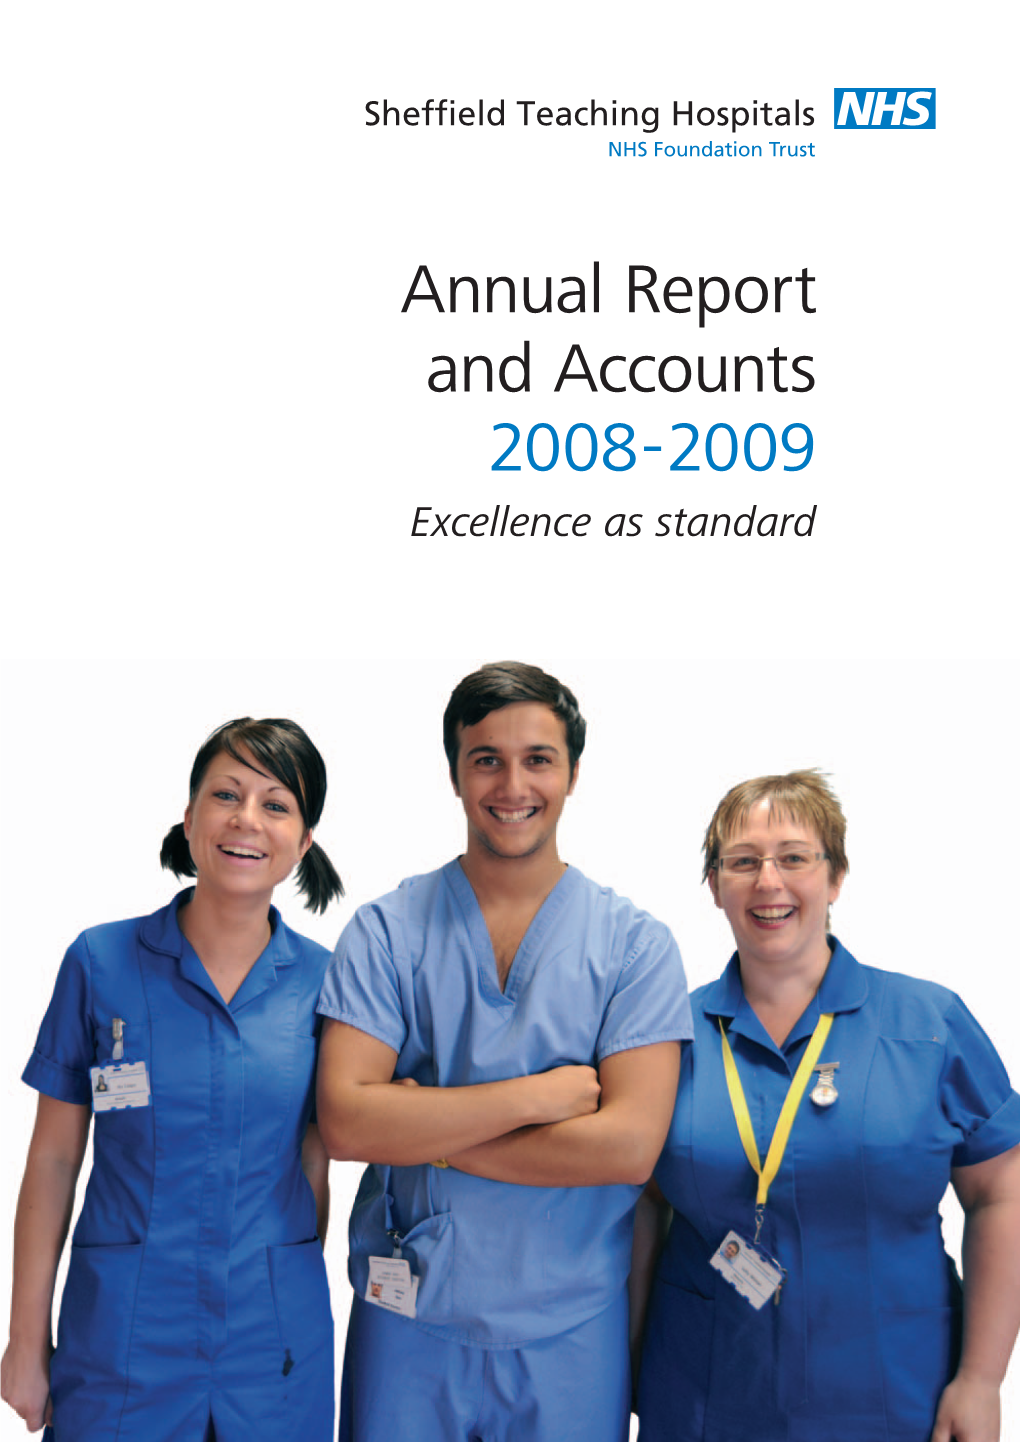 Annual Report 2008/09